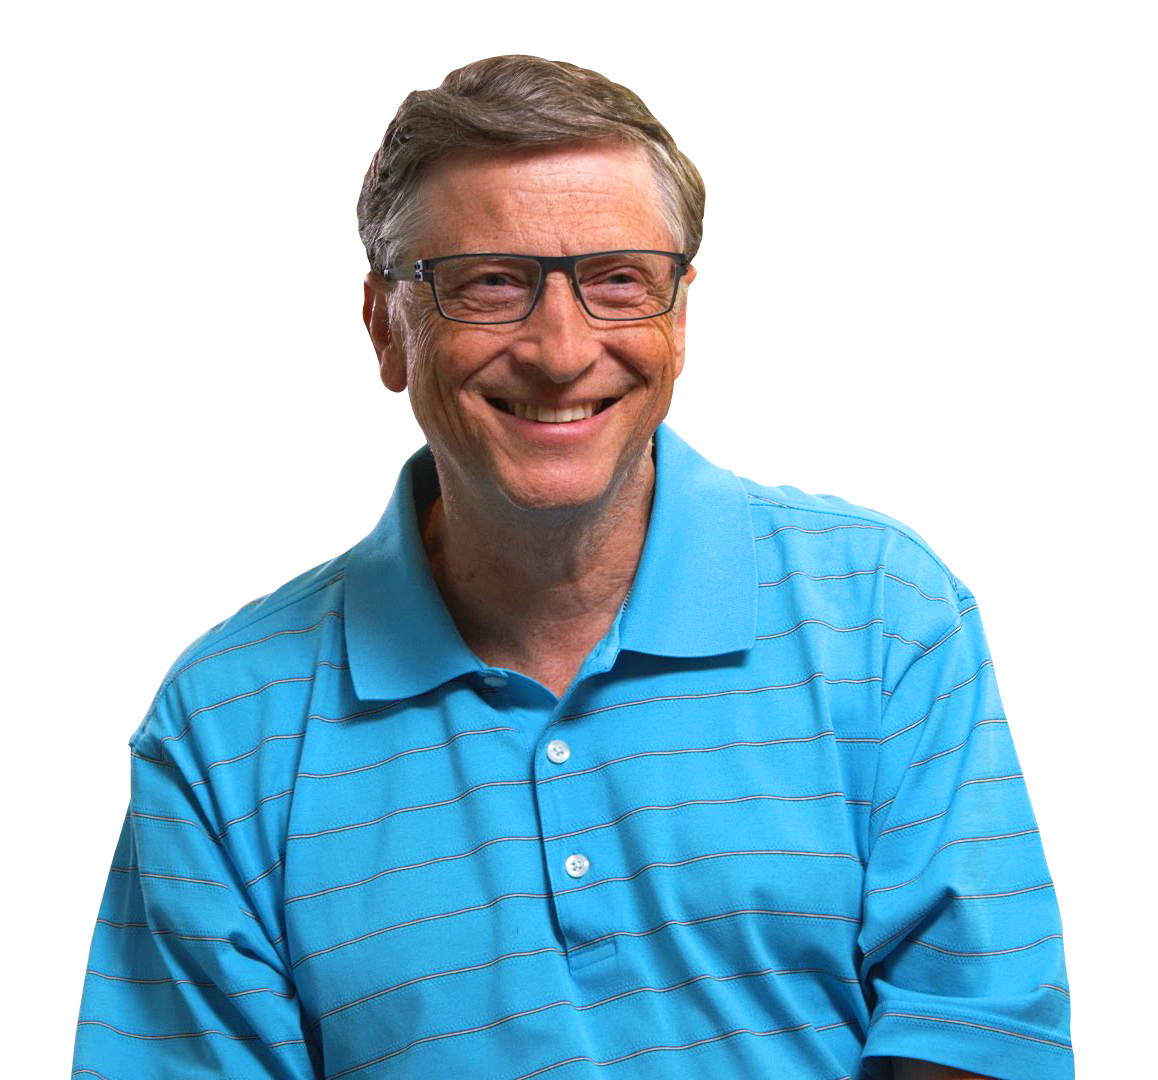 Bill Gates PNG Pic